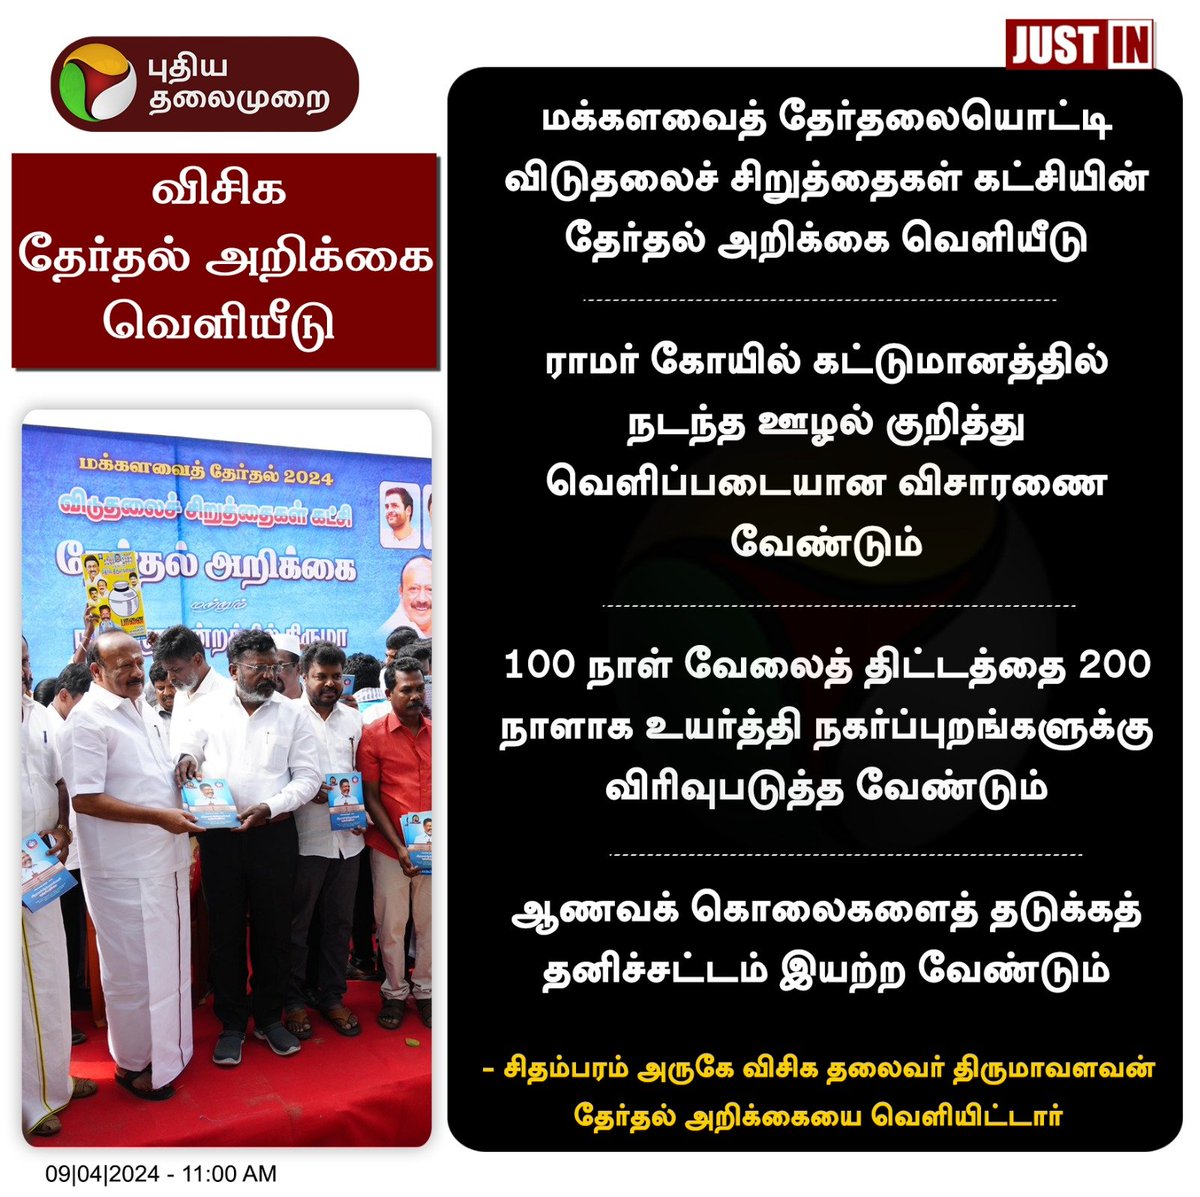 #JUSTIN | விசிக தேர்தல் அறிக்கை வெளியீடு

#VCK | #Elections2024 | #Thirumavalvan